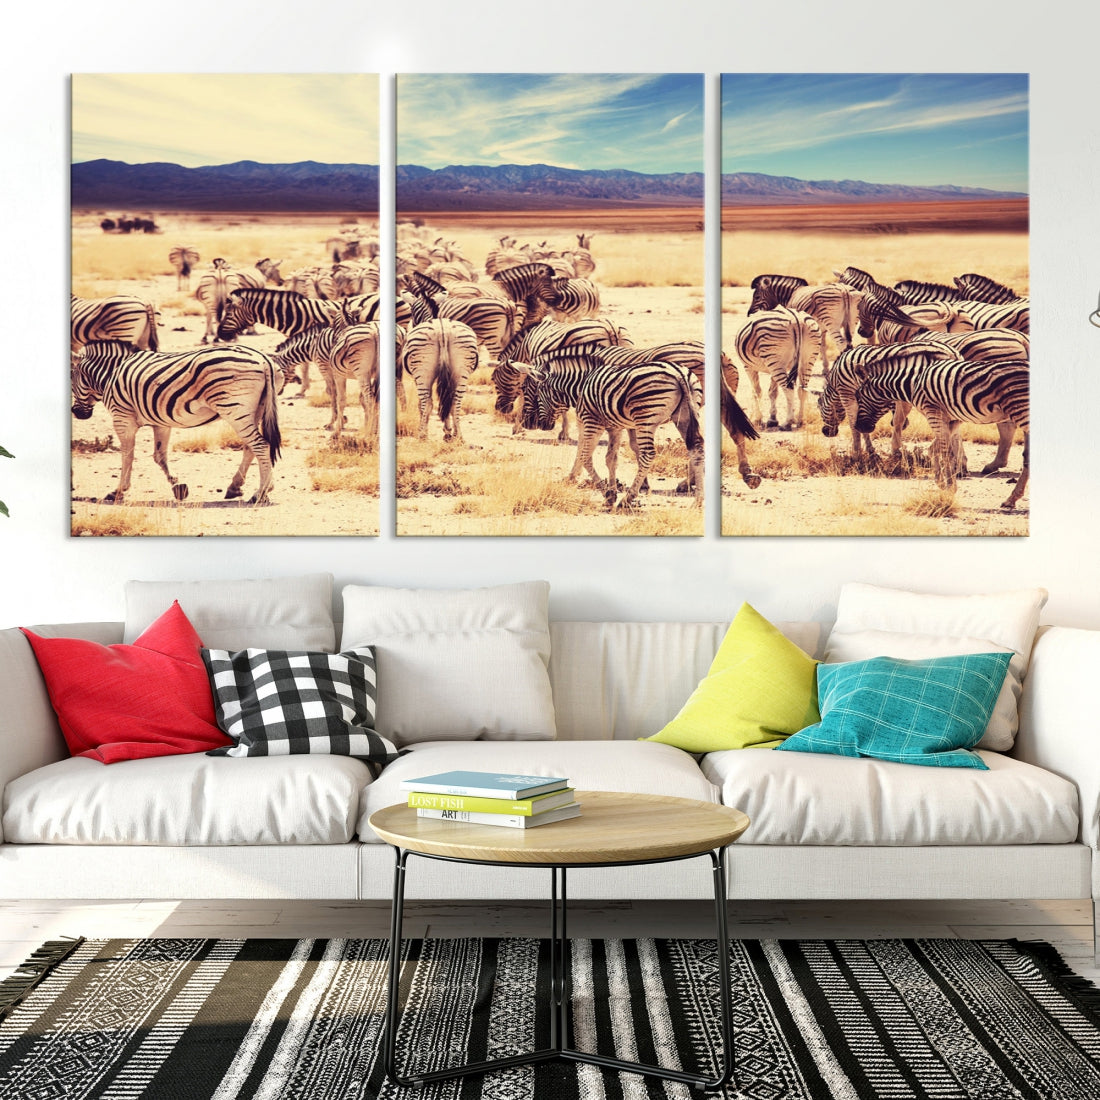 Zebras in the Savannah Africa Wild Animals Wildlife Photo Canvas Wall Art Giclee Print